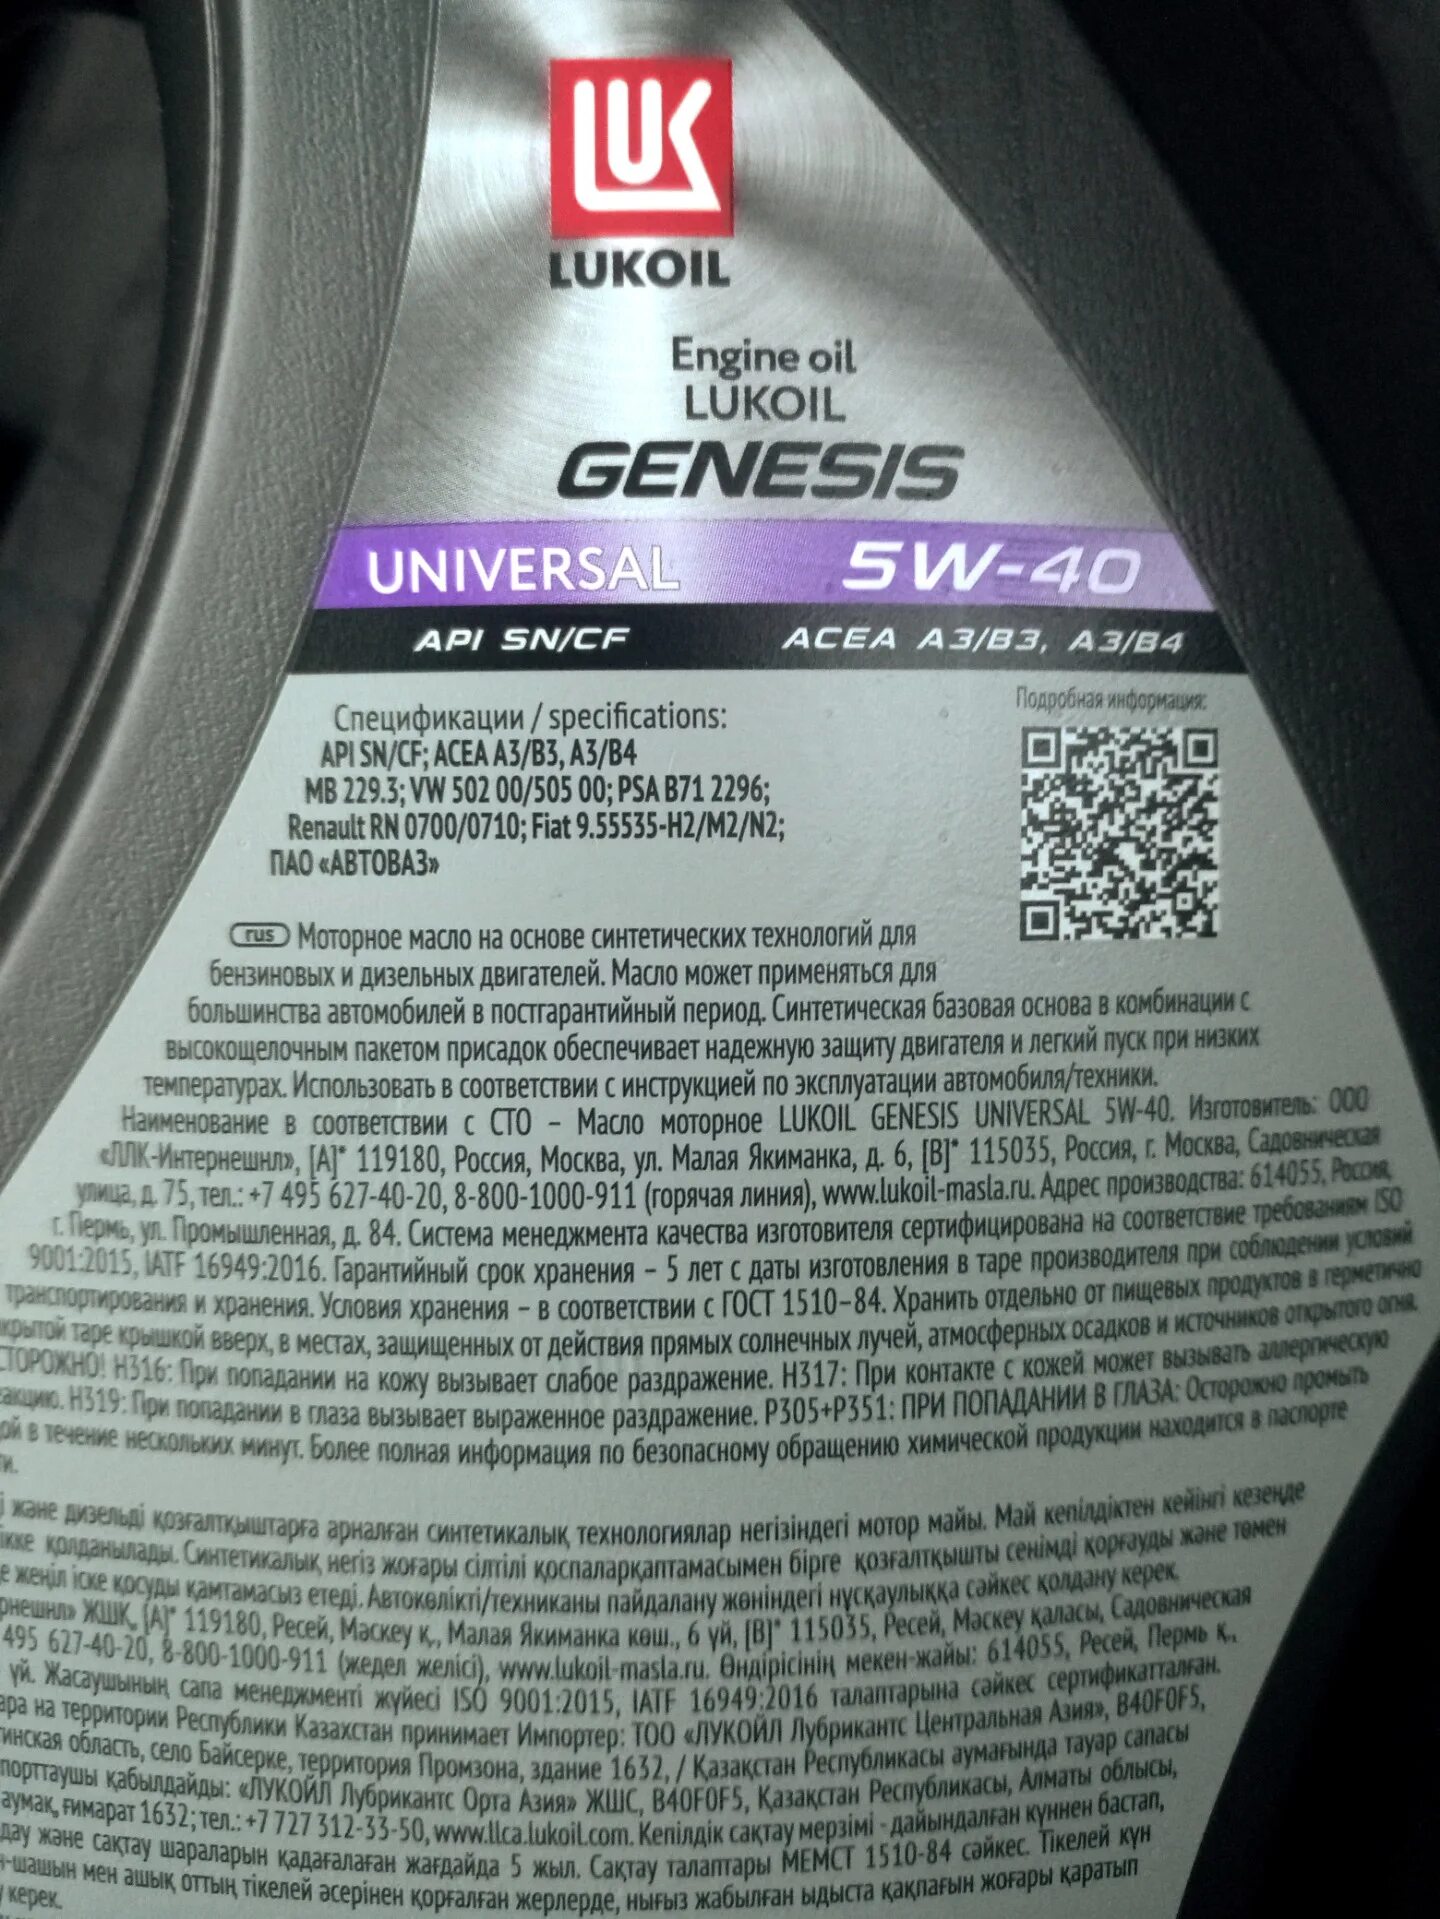 Лукойл Genesis Universal 5w40. Genesis Universal 5w-40. Lukoil Genesis Universal 5w-40. Лукойл масла Genesis Universal. Масло лукойл генезис универсал 5w40